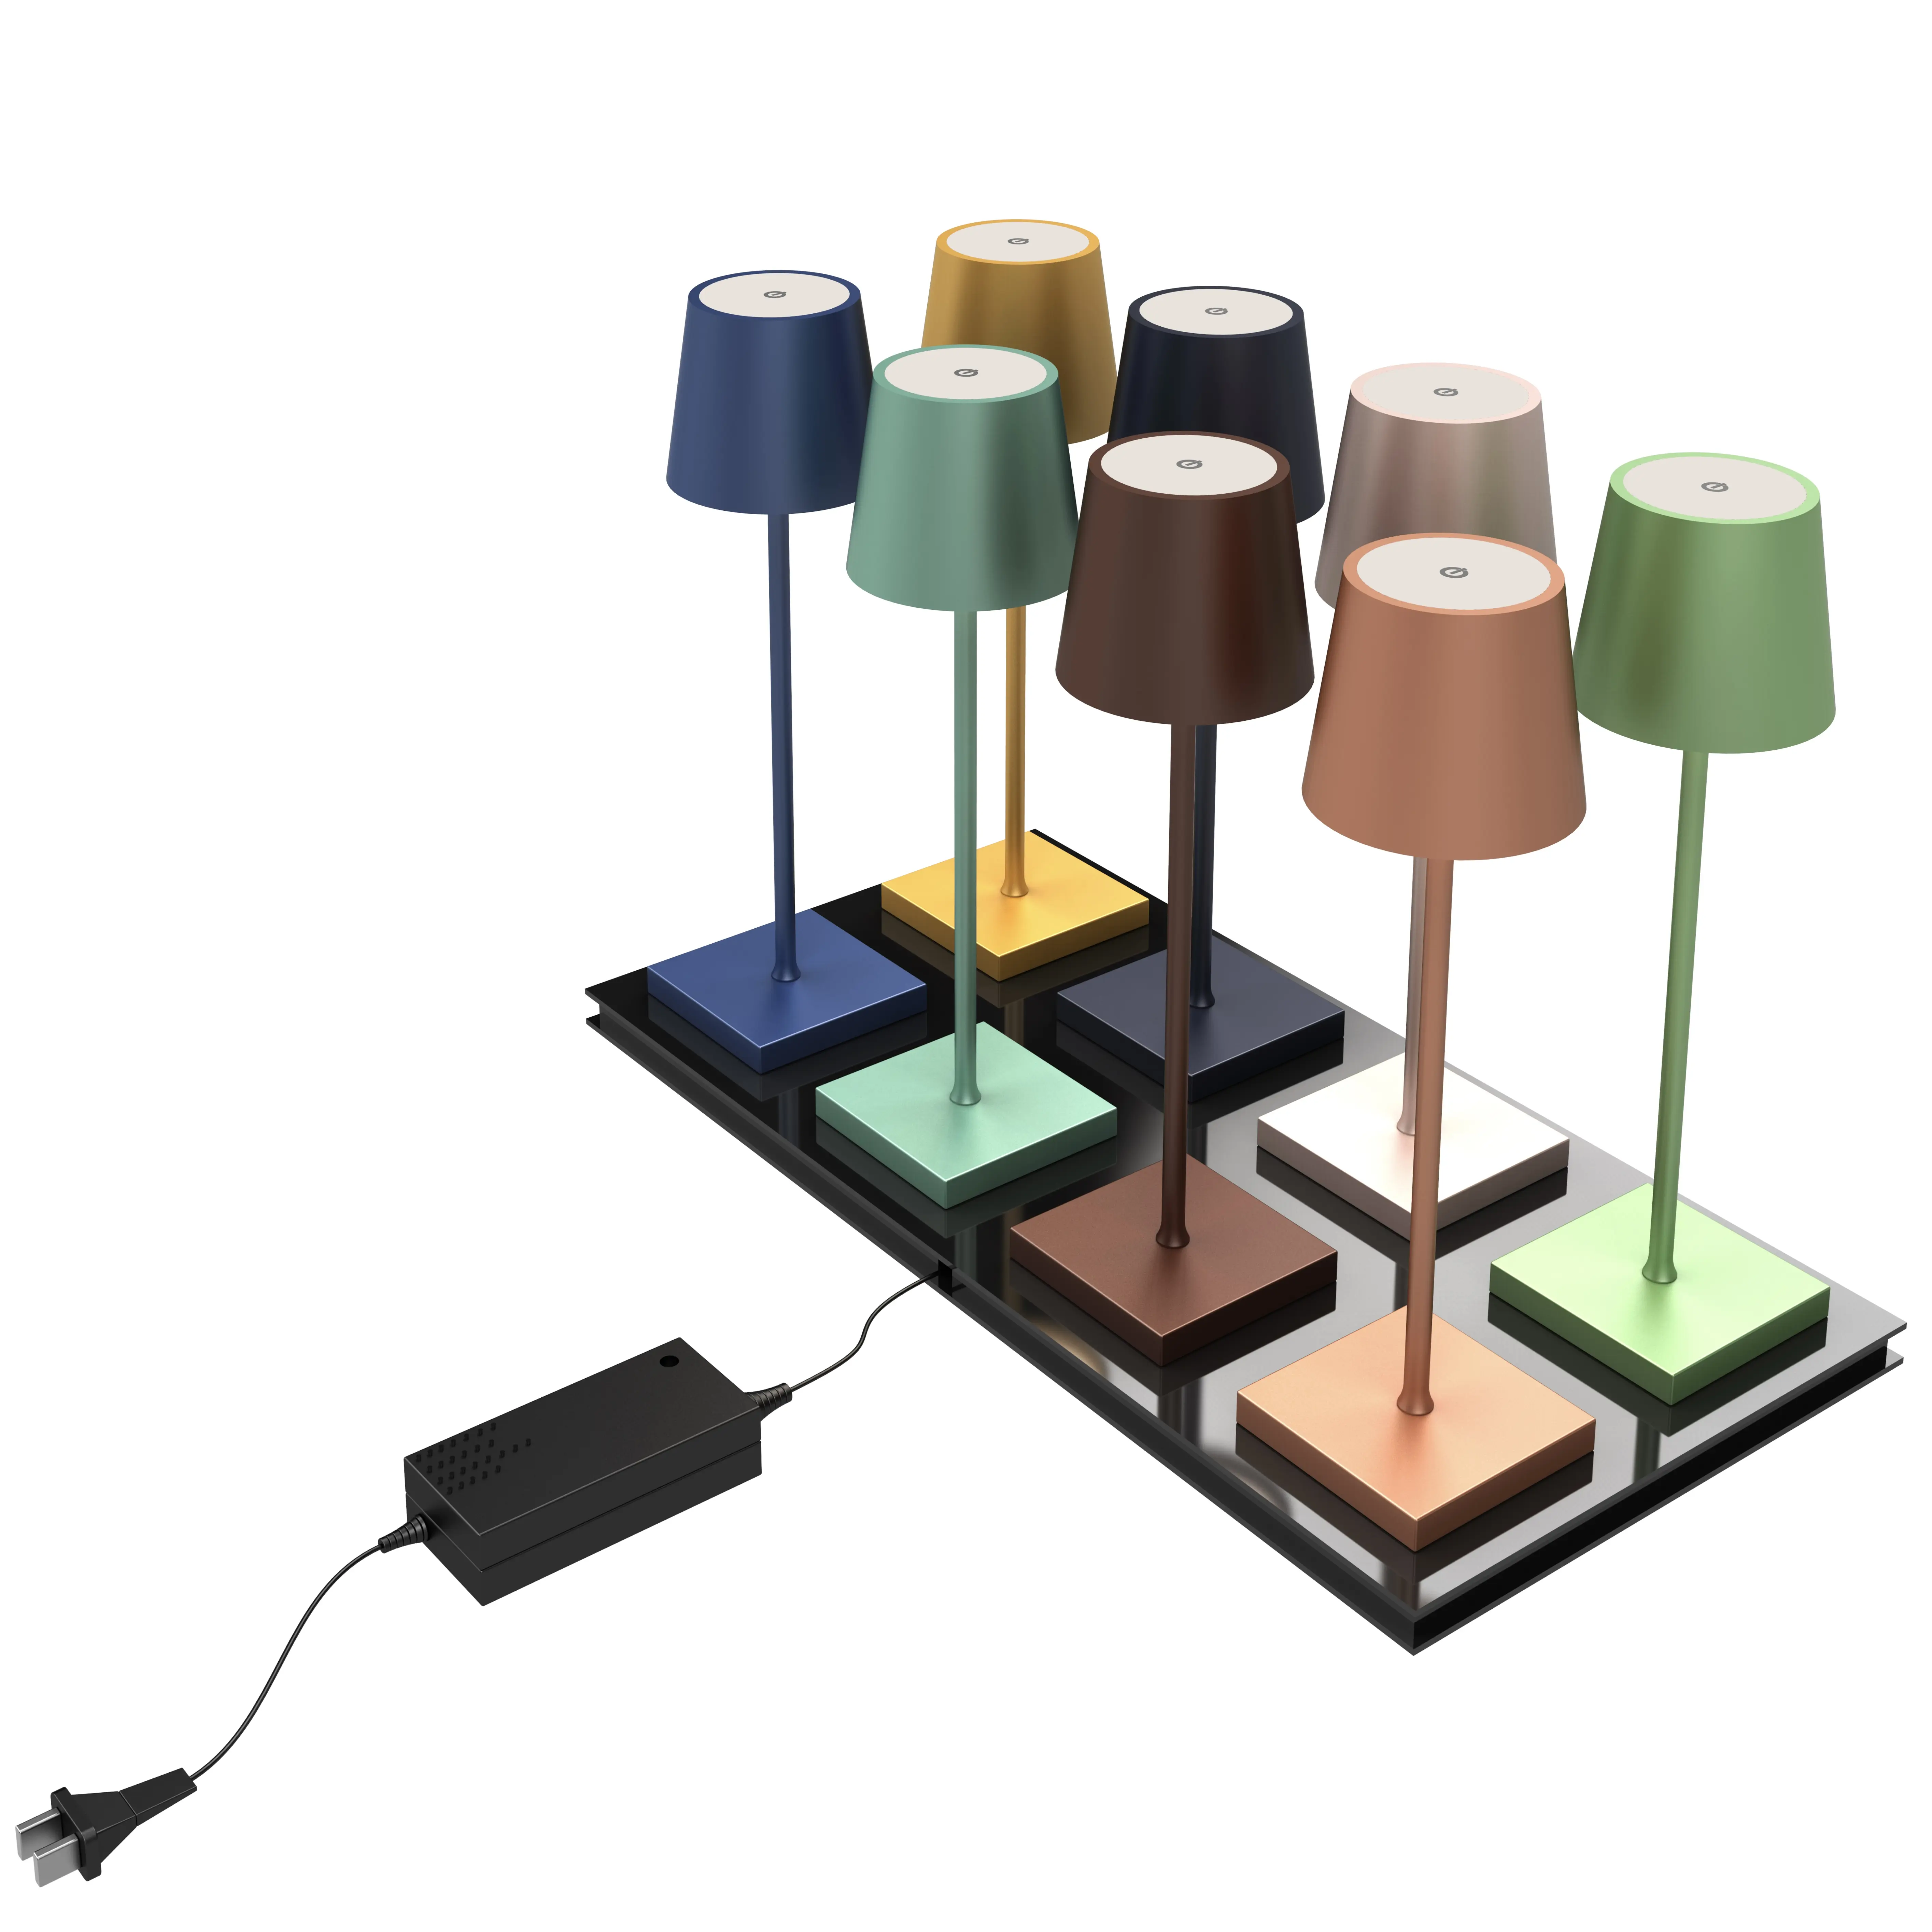 Lampu meja Led tanpa kabel, cahaya samping tempat tidur mewah Modern, kontak nirkabel, dasar pengisian daya, baterai sentuh, dapat diisi ulang tanpa kabel